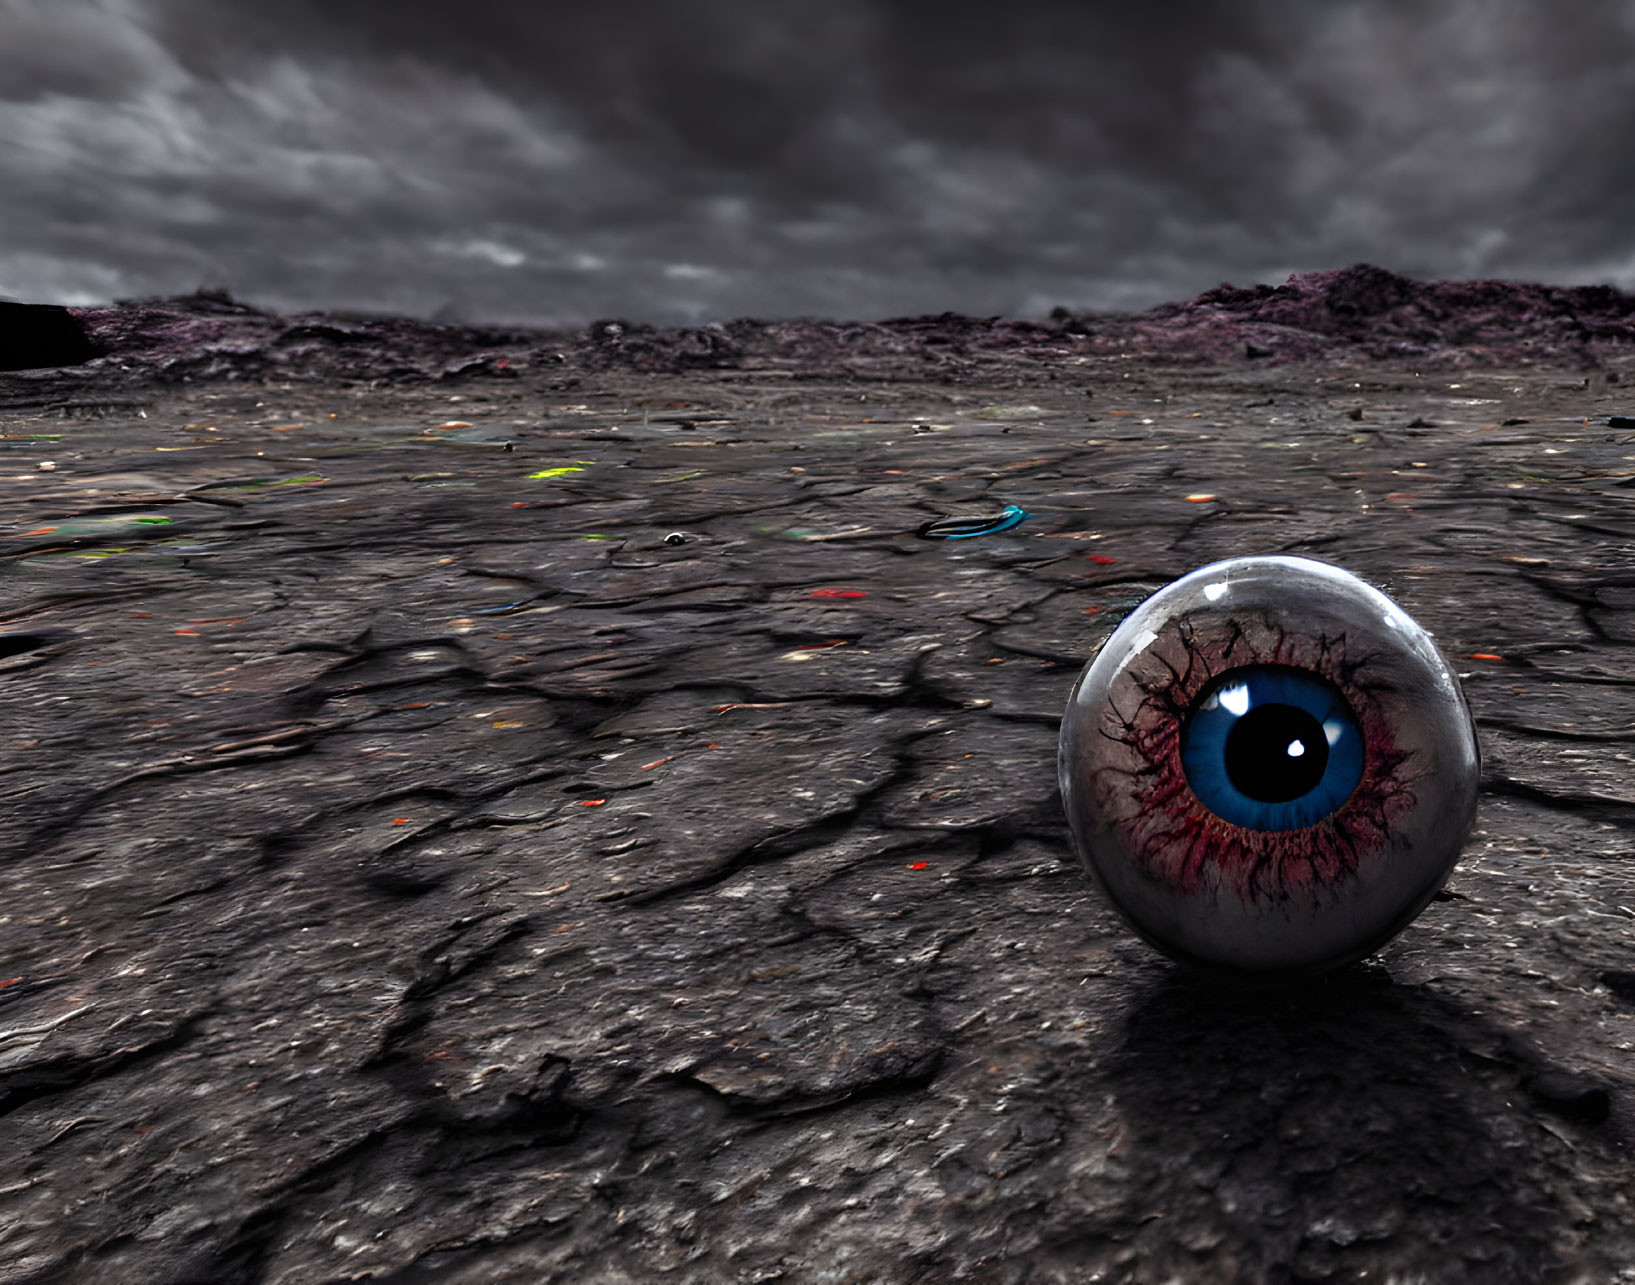 Detailed surreal image: giant eyeball on cracked barren landscape under dark sky